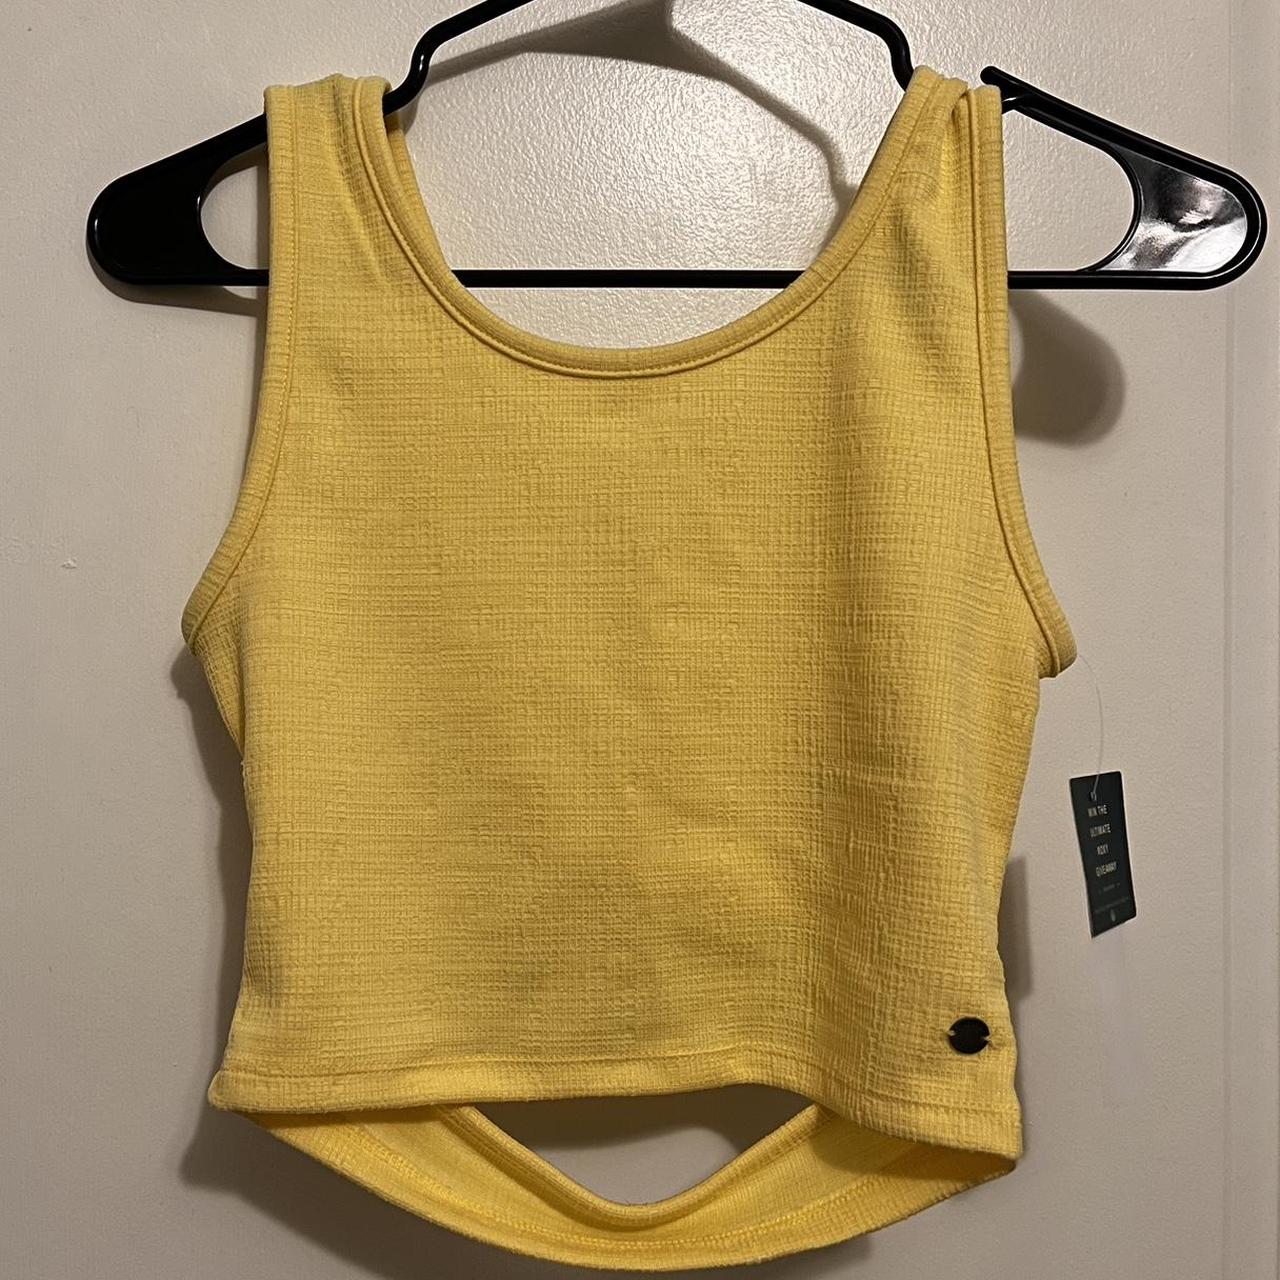 Roxy Women's Yellow Vest